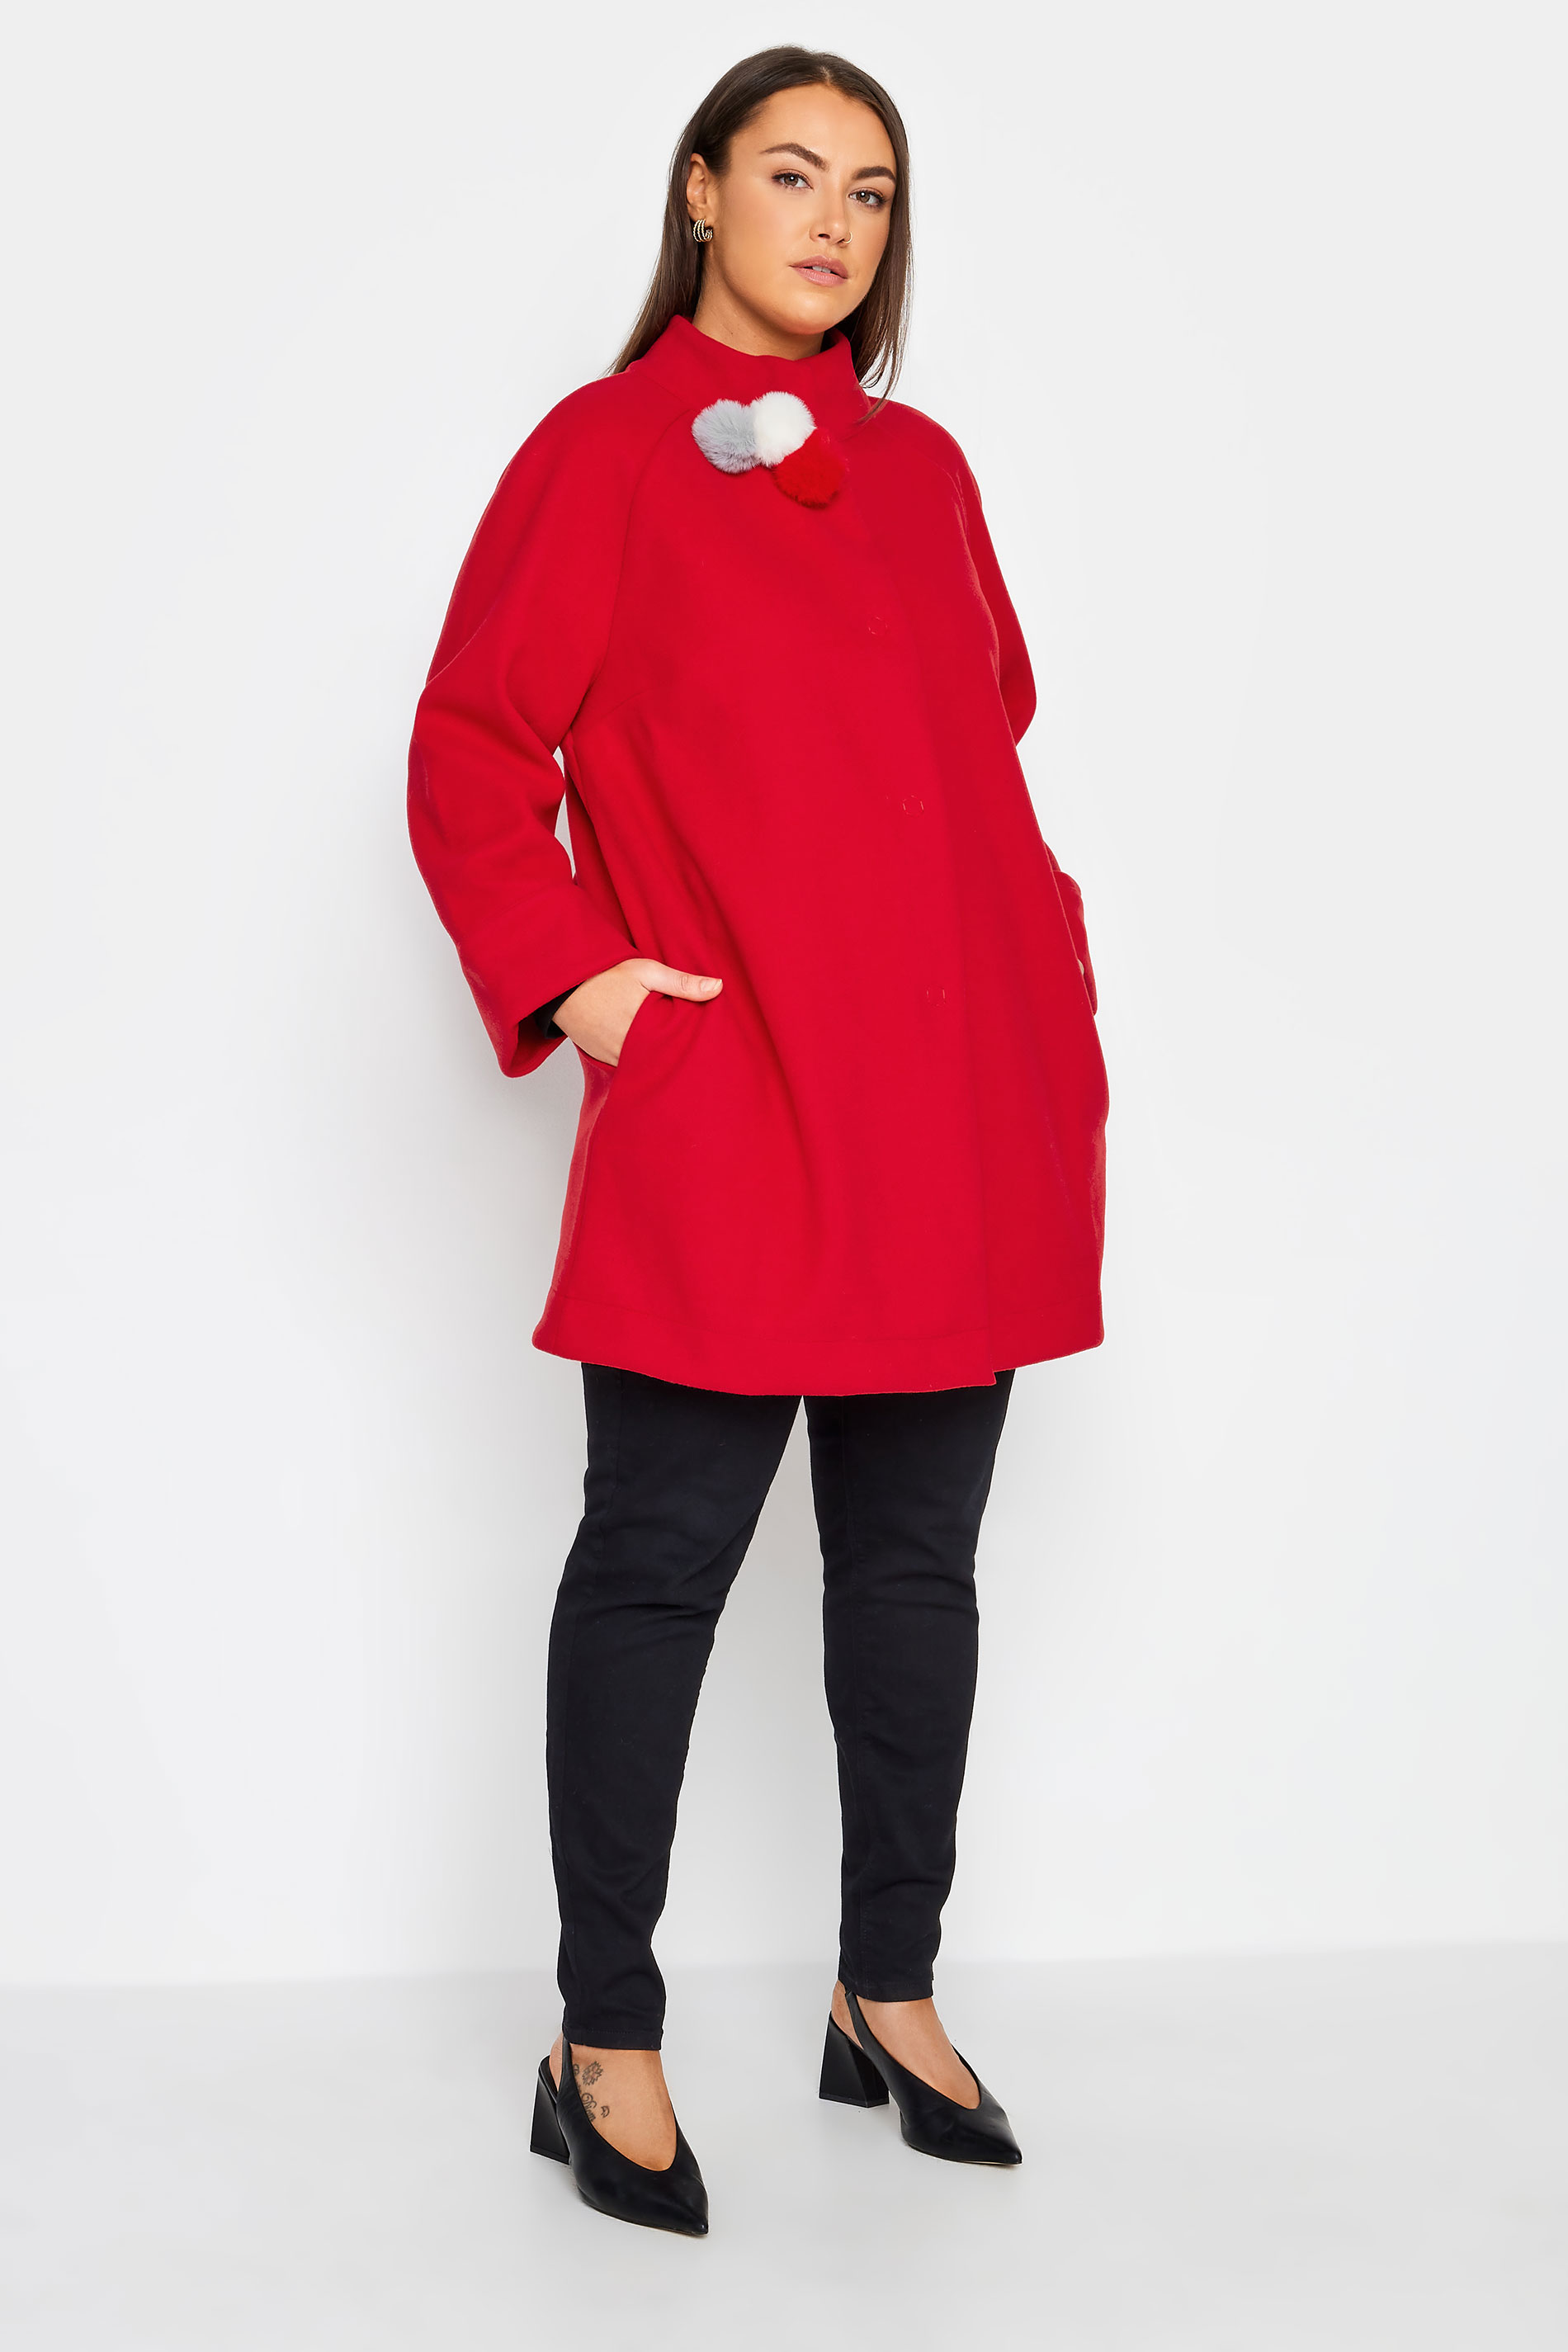 Manon Baptiste Red Funnel Collar Wide Sleeve Coat 2